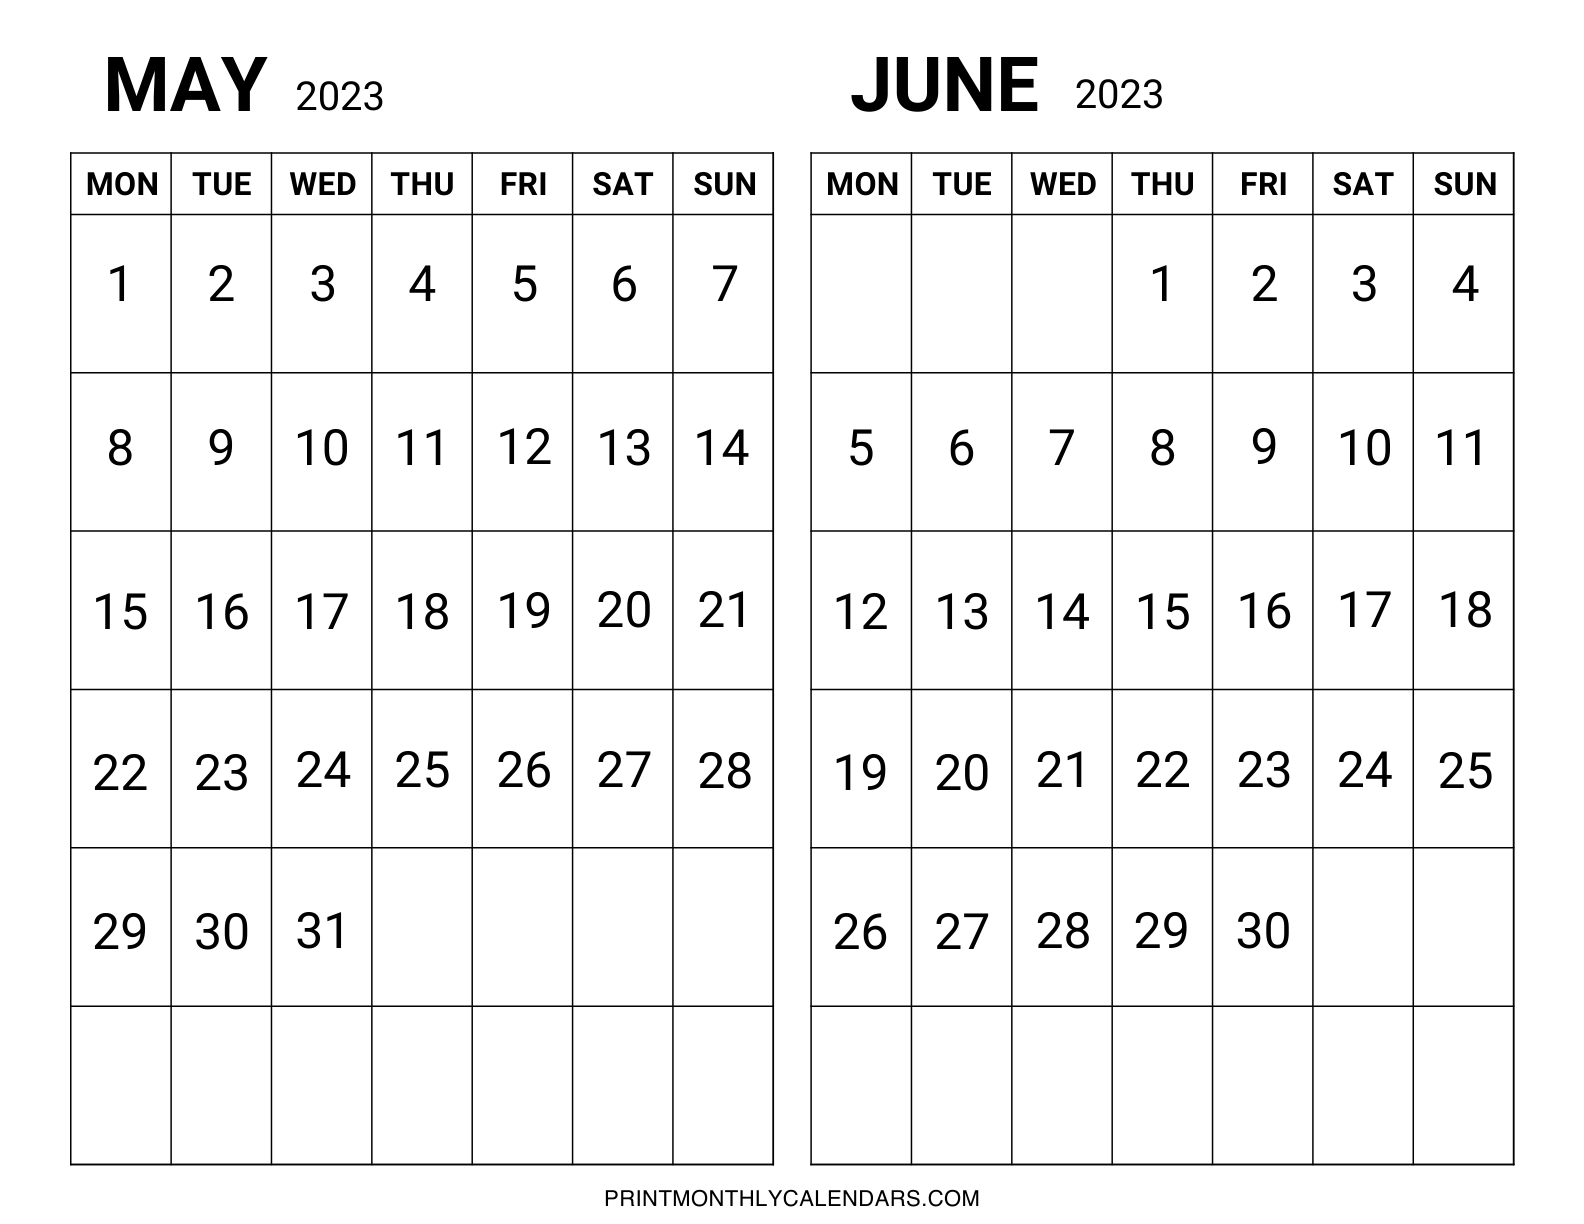 may and june 2023 calendar calendar quickly may june 2023 calendar